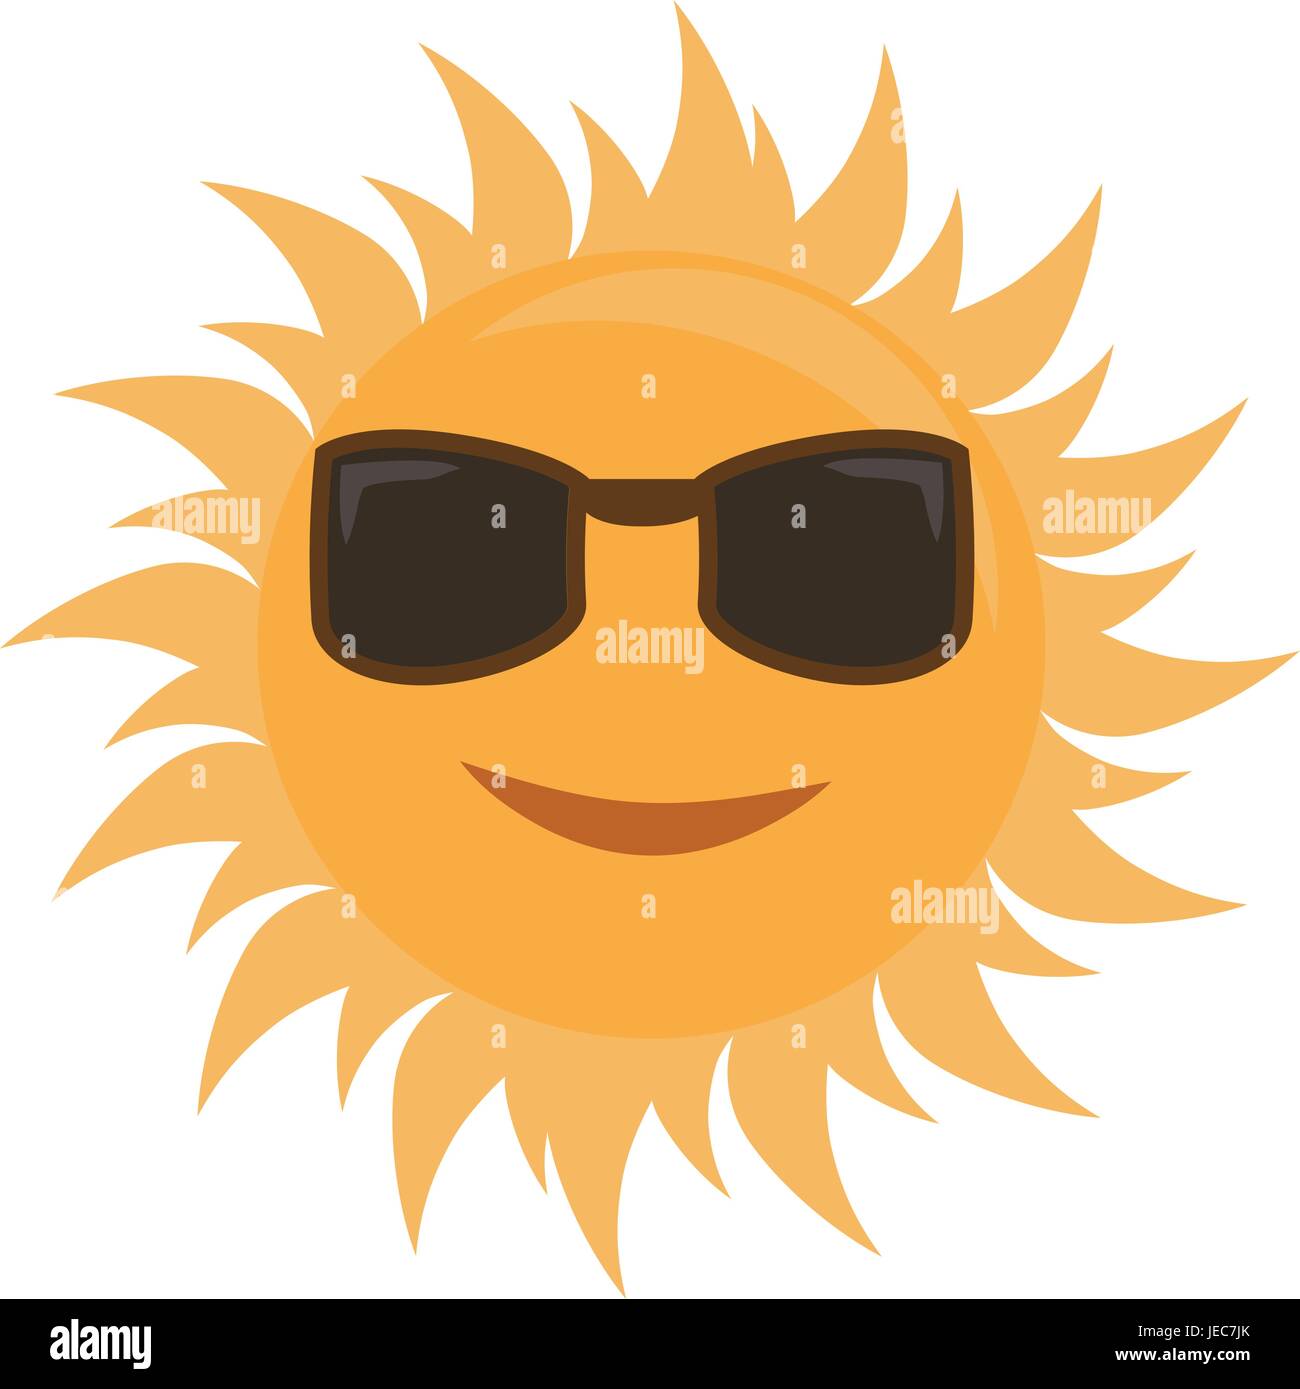 3D realistic sun with sunglasses, vector illustration - stock vector  1838399 | Crushpixel